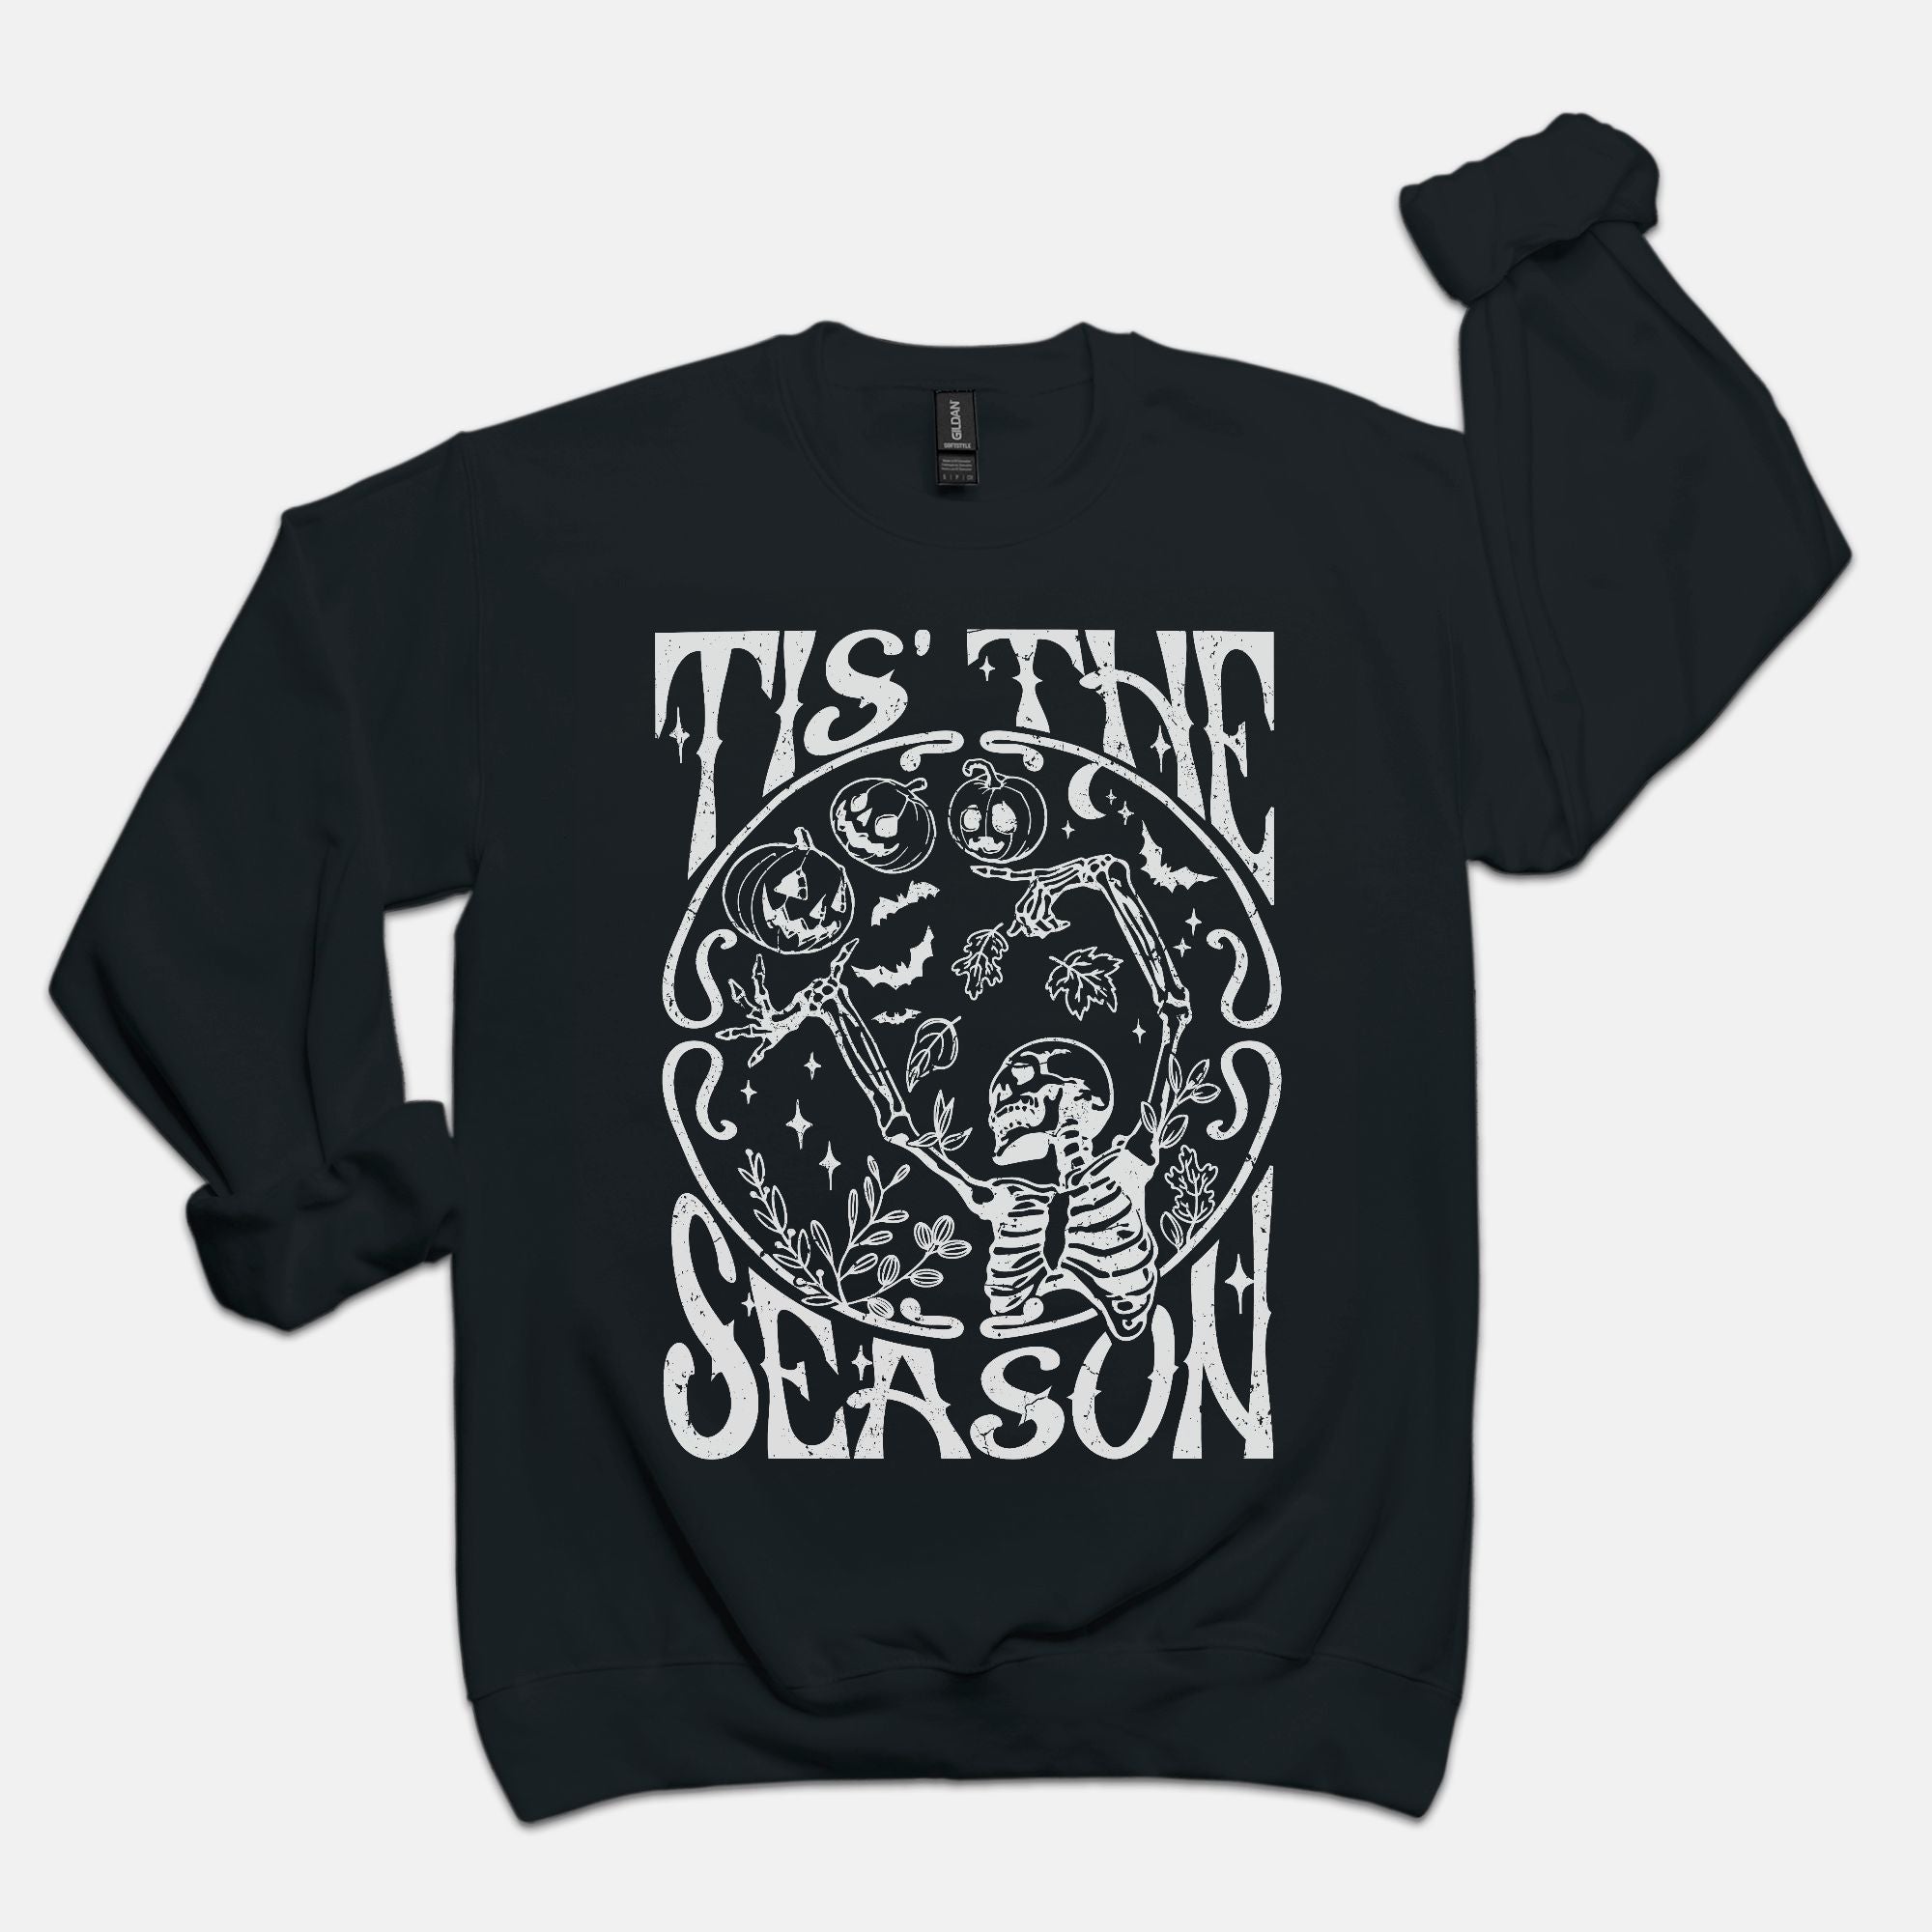 Tis The Season Crew Sweatshirt - UntamedEgo LLC.